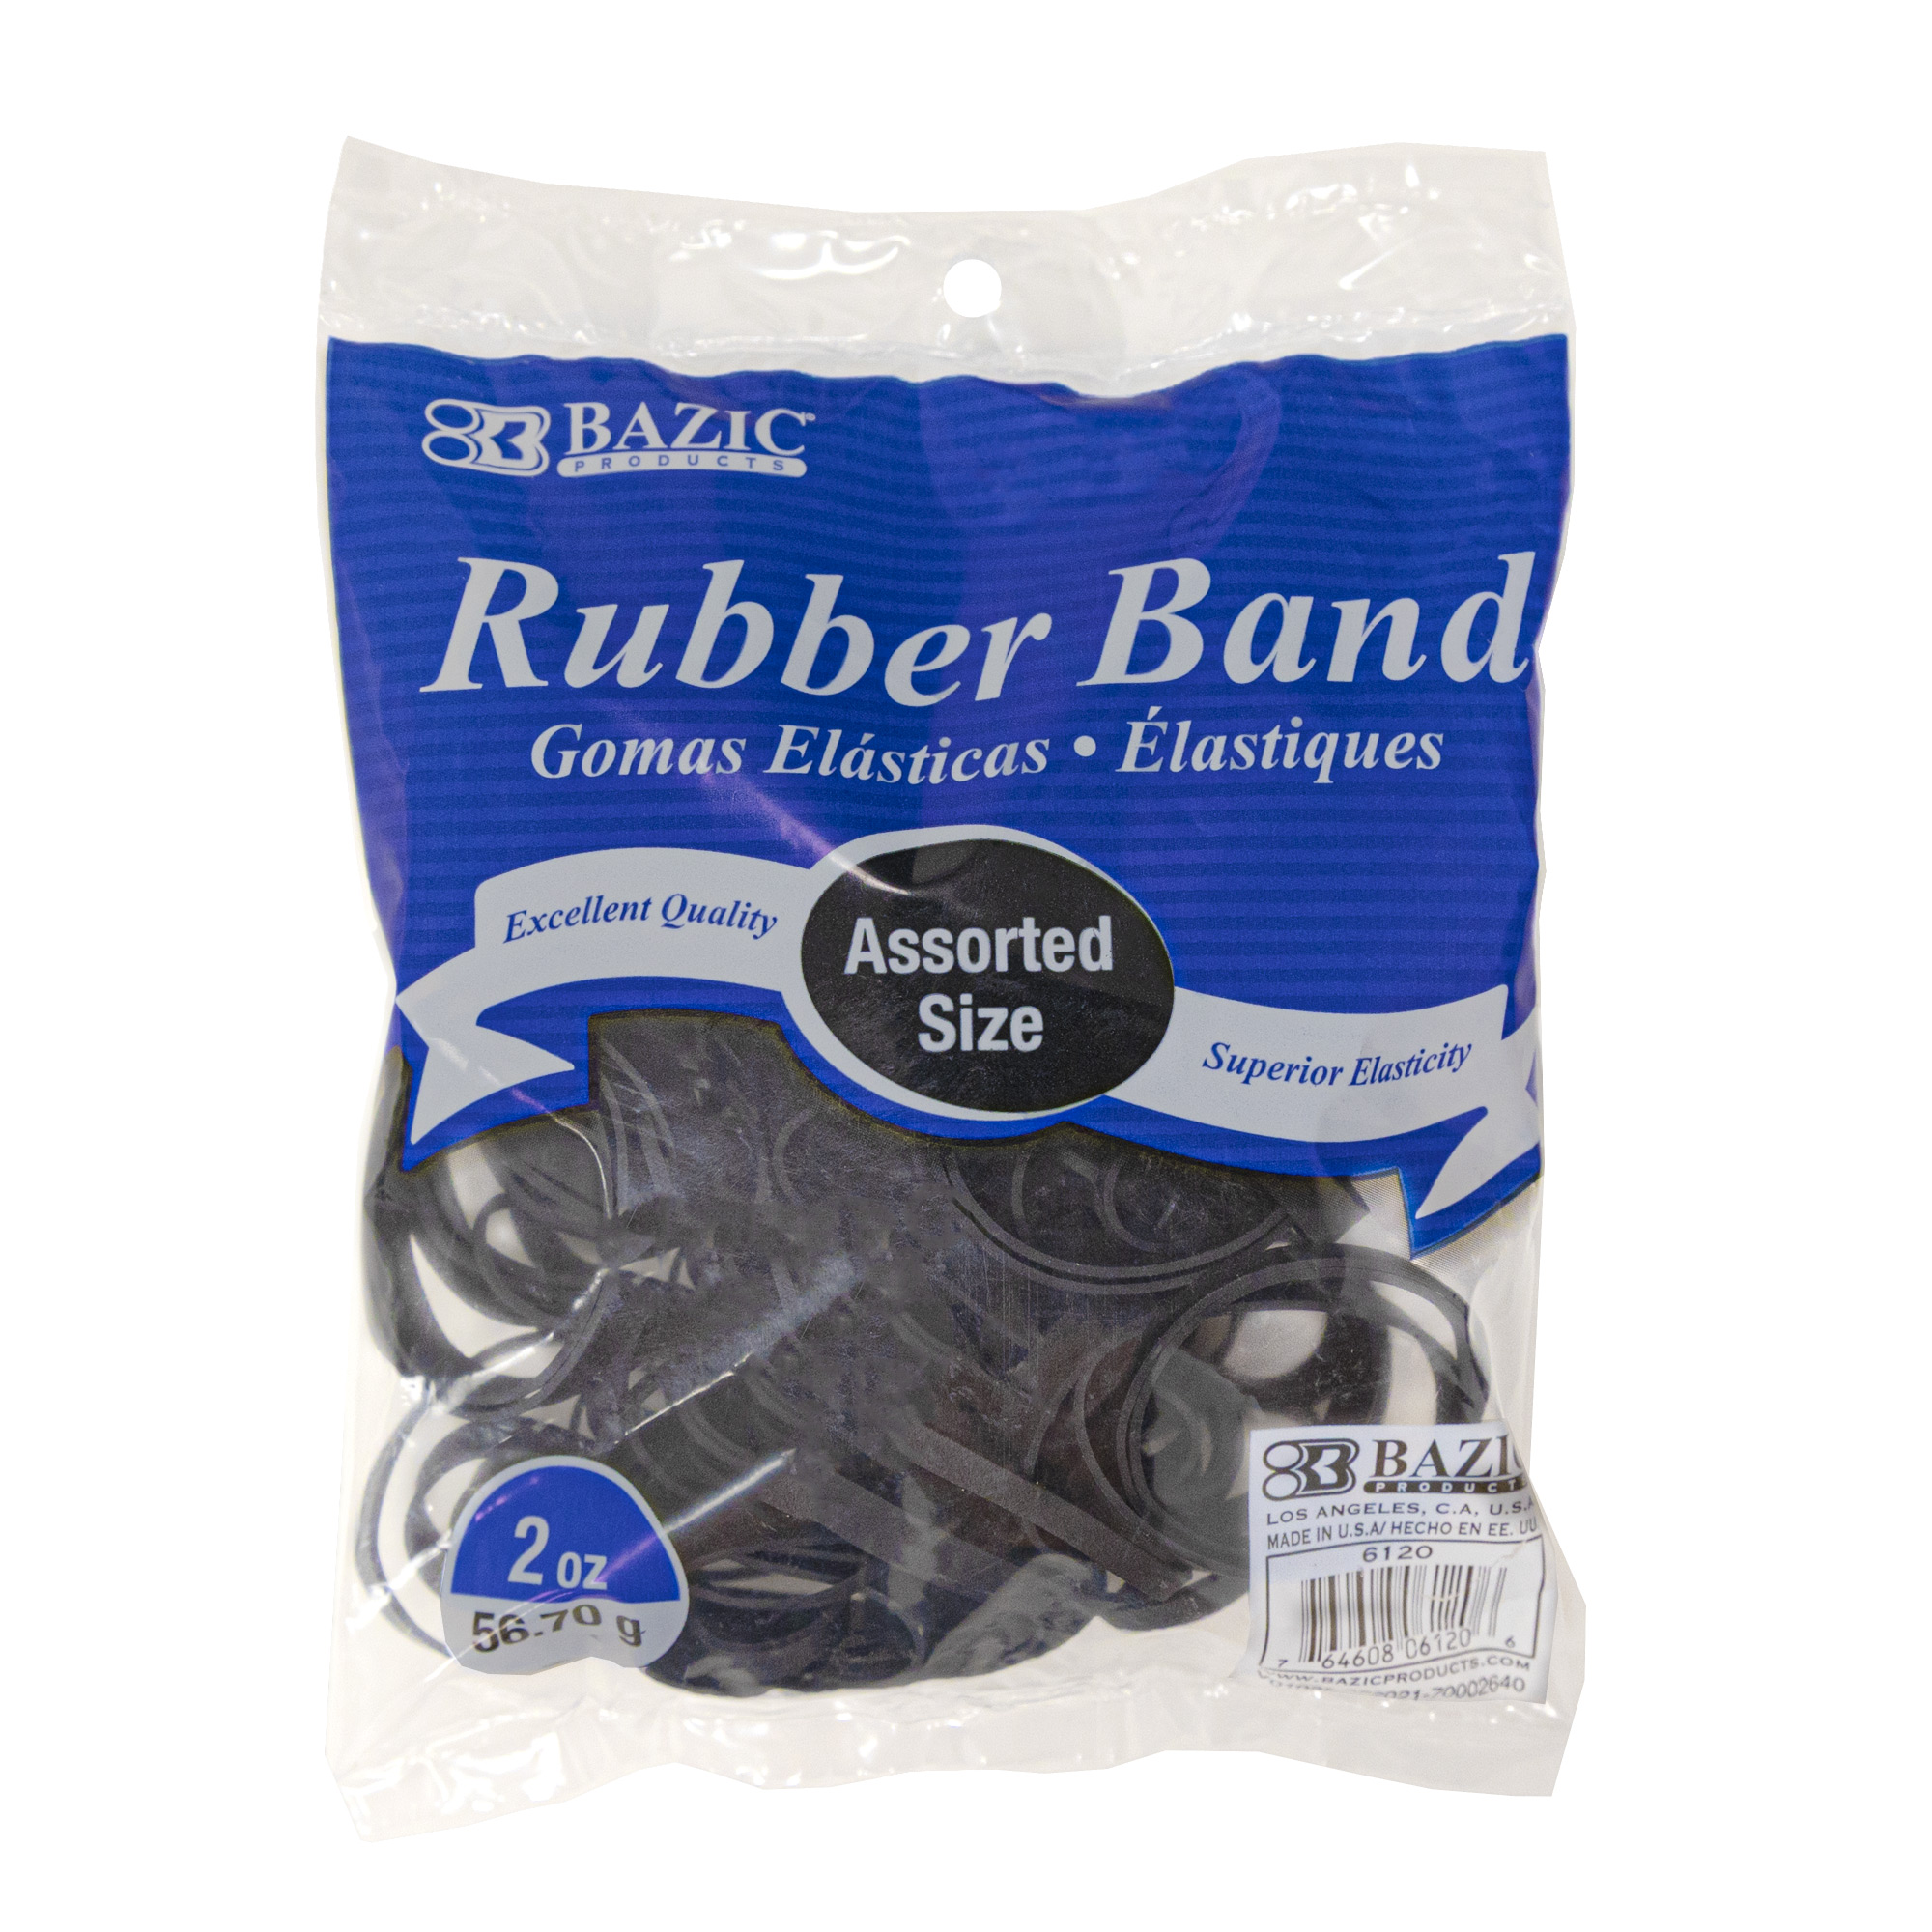 2 Oz./ 56.70 g Assorted Sizes Black Color Rubber Bands